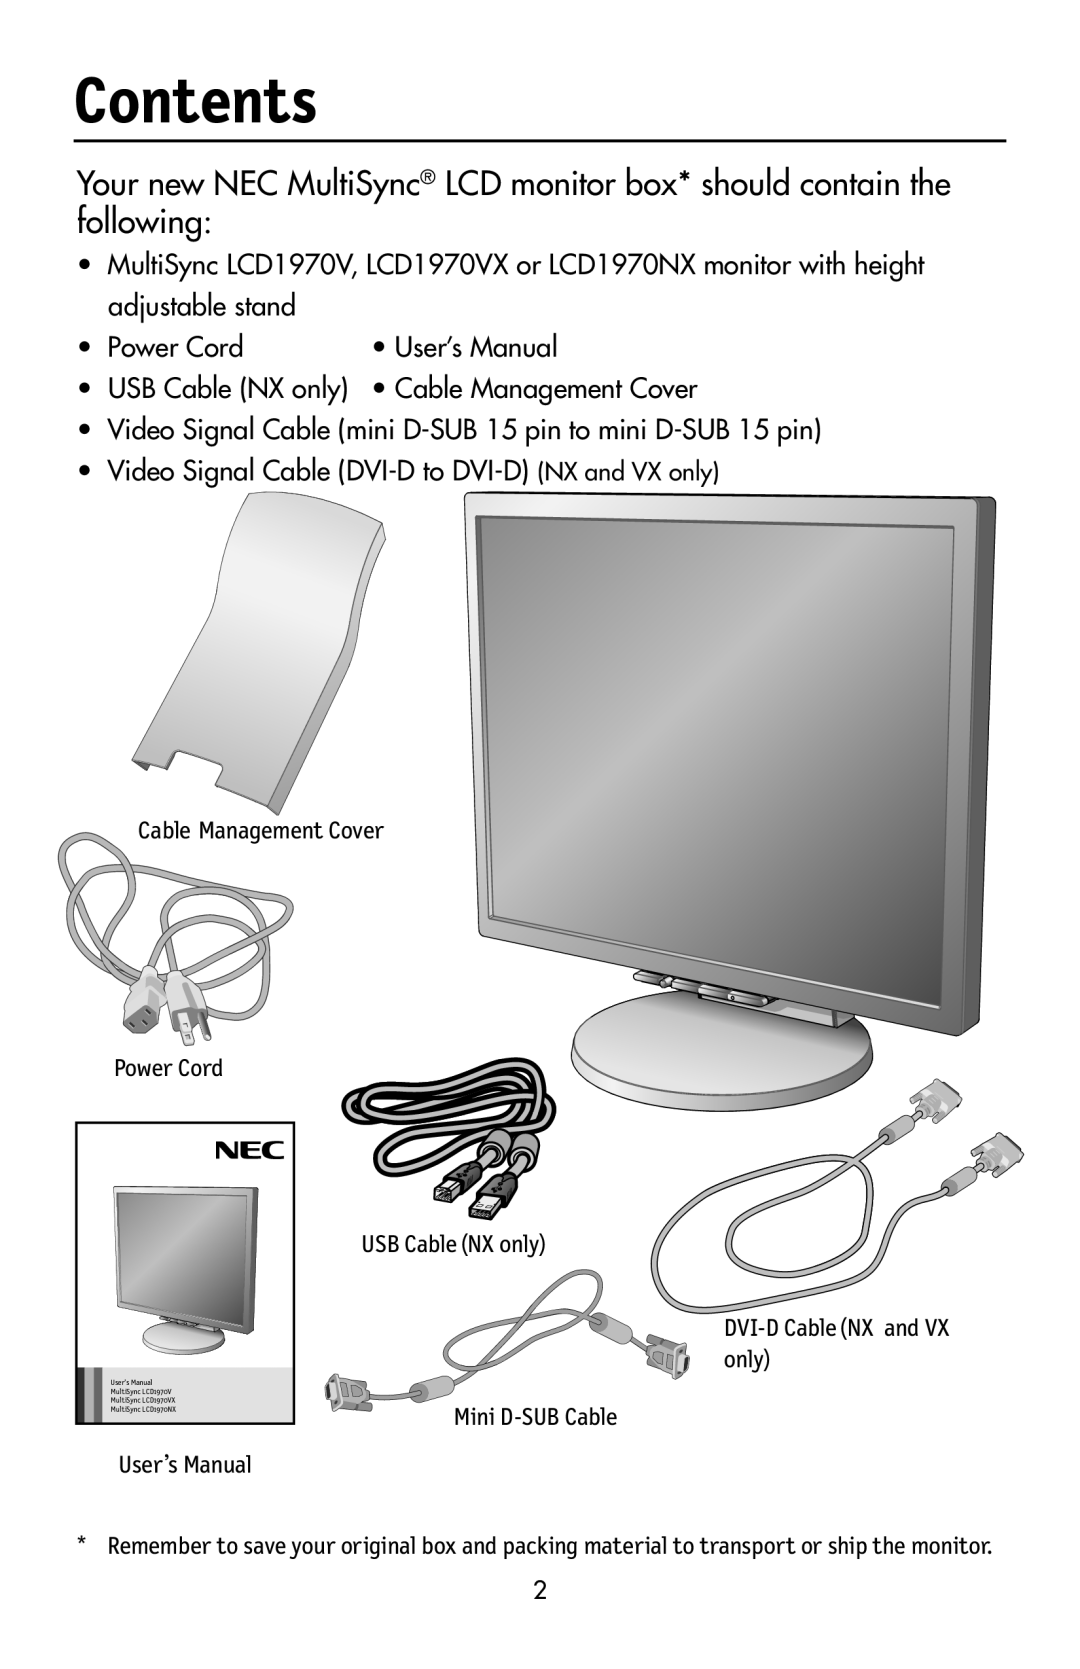 NEC user manual Contents, MultiSync LCD1970VX, MultiSync LCD1970NX 